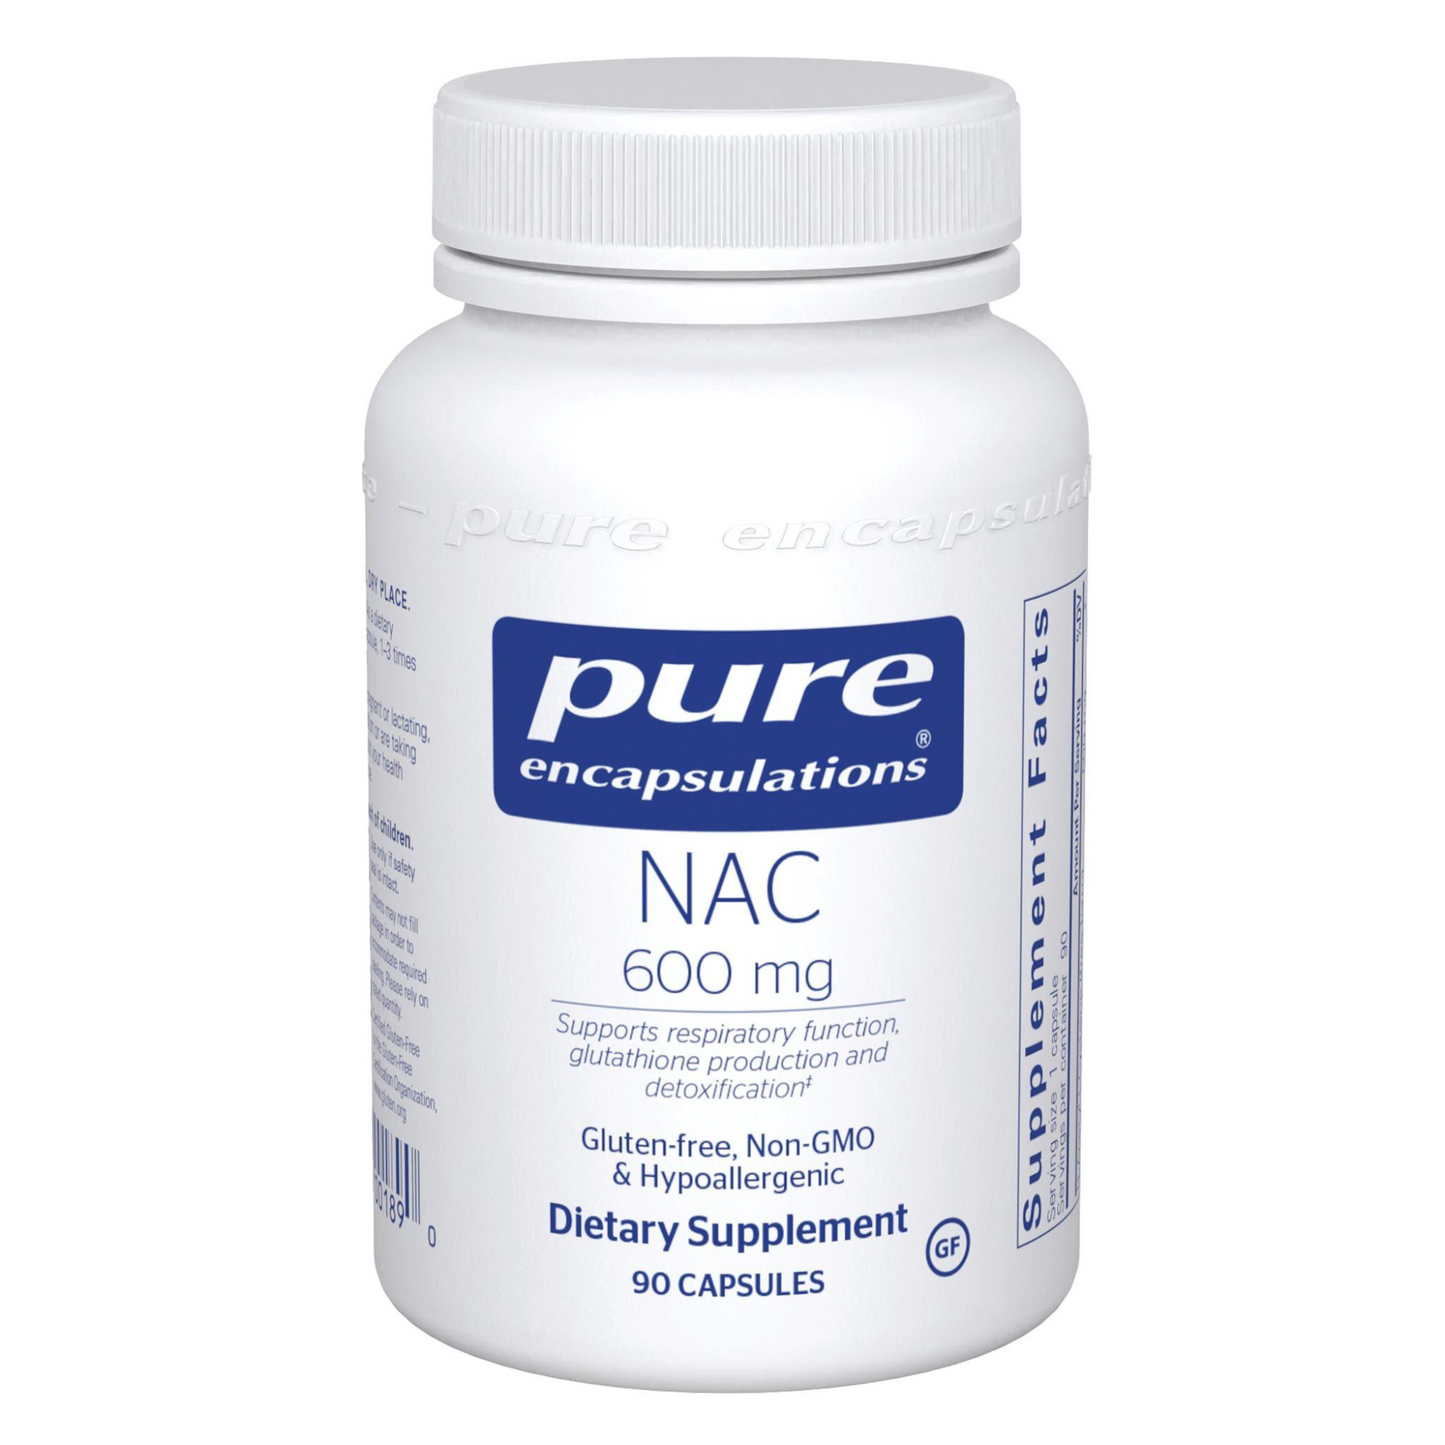 Primary Image of NAC (N-Acetyl-l-Cysteine) 600 mg Capsules